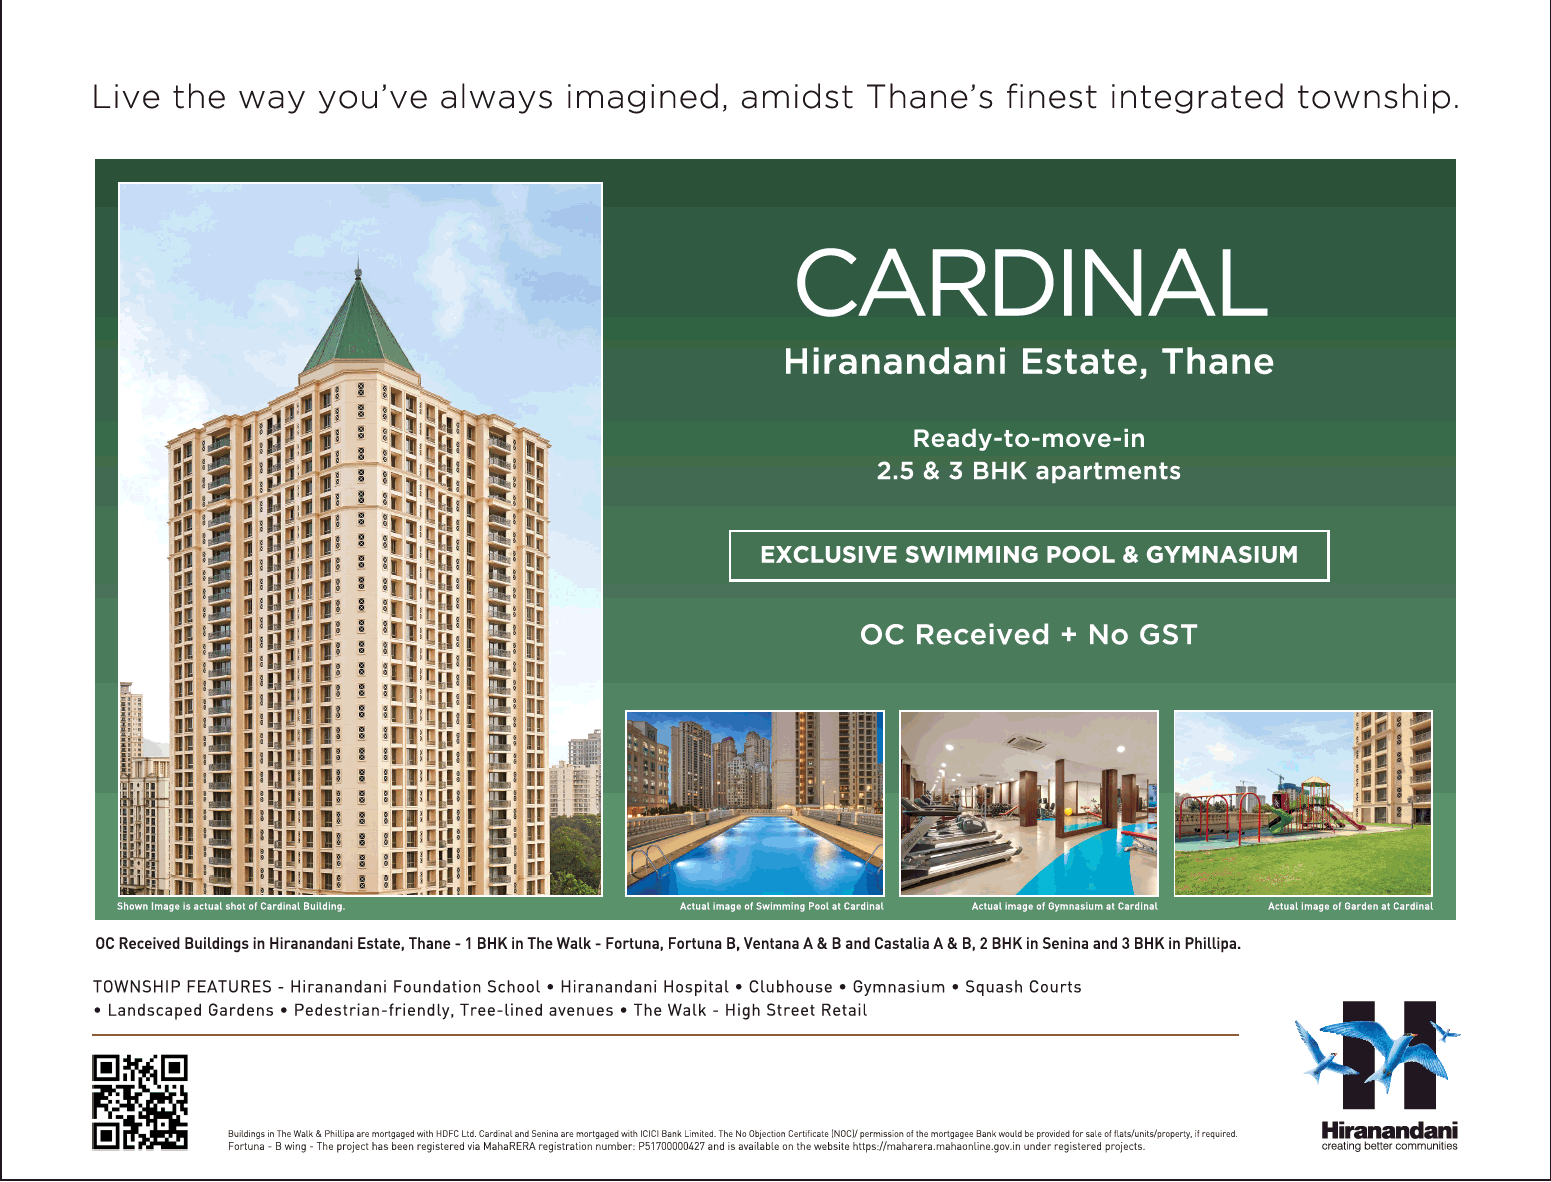 Avail exclusive swimming pool & gymnasium at Hiranandani Cardinal in Mumbai Update